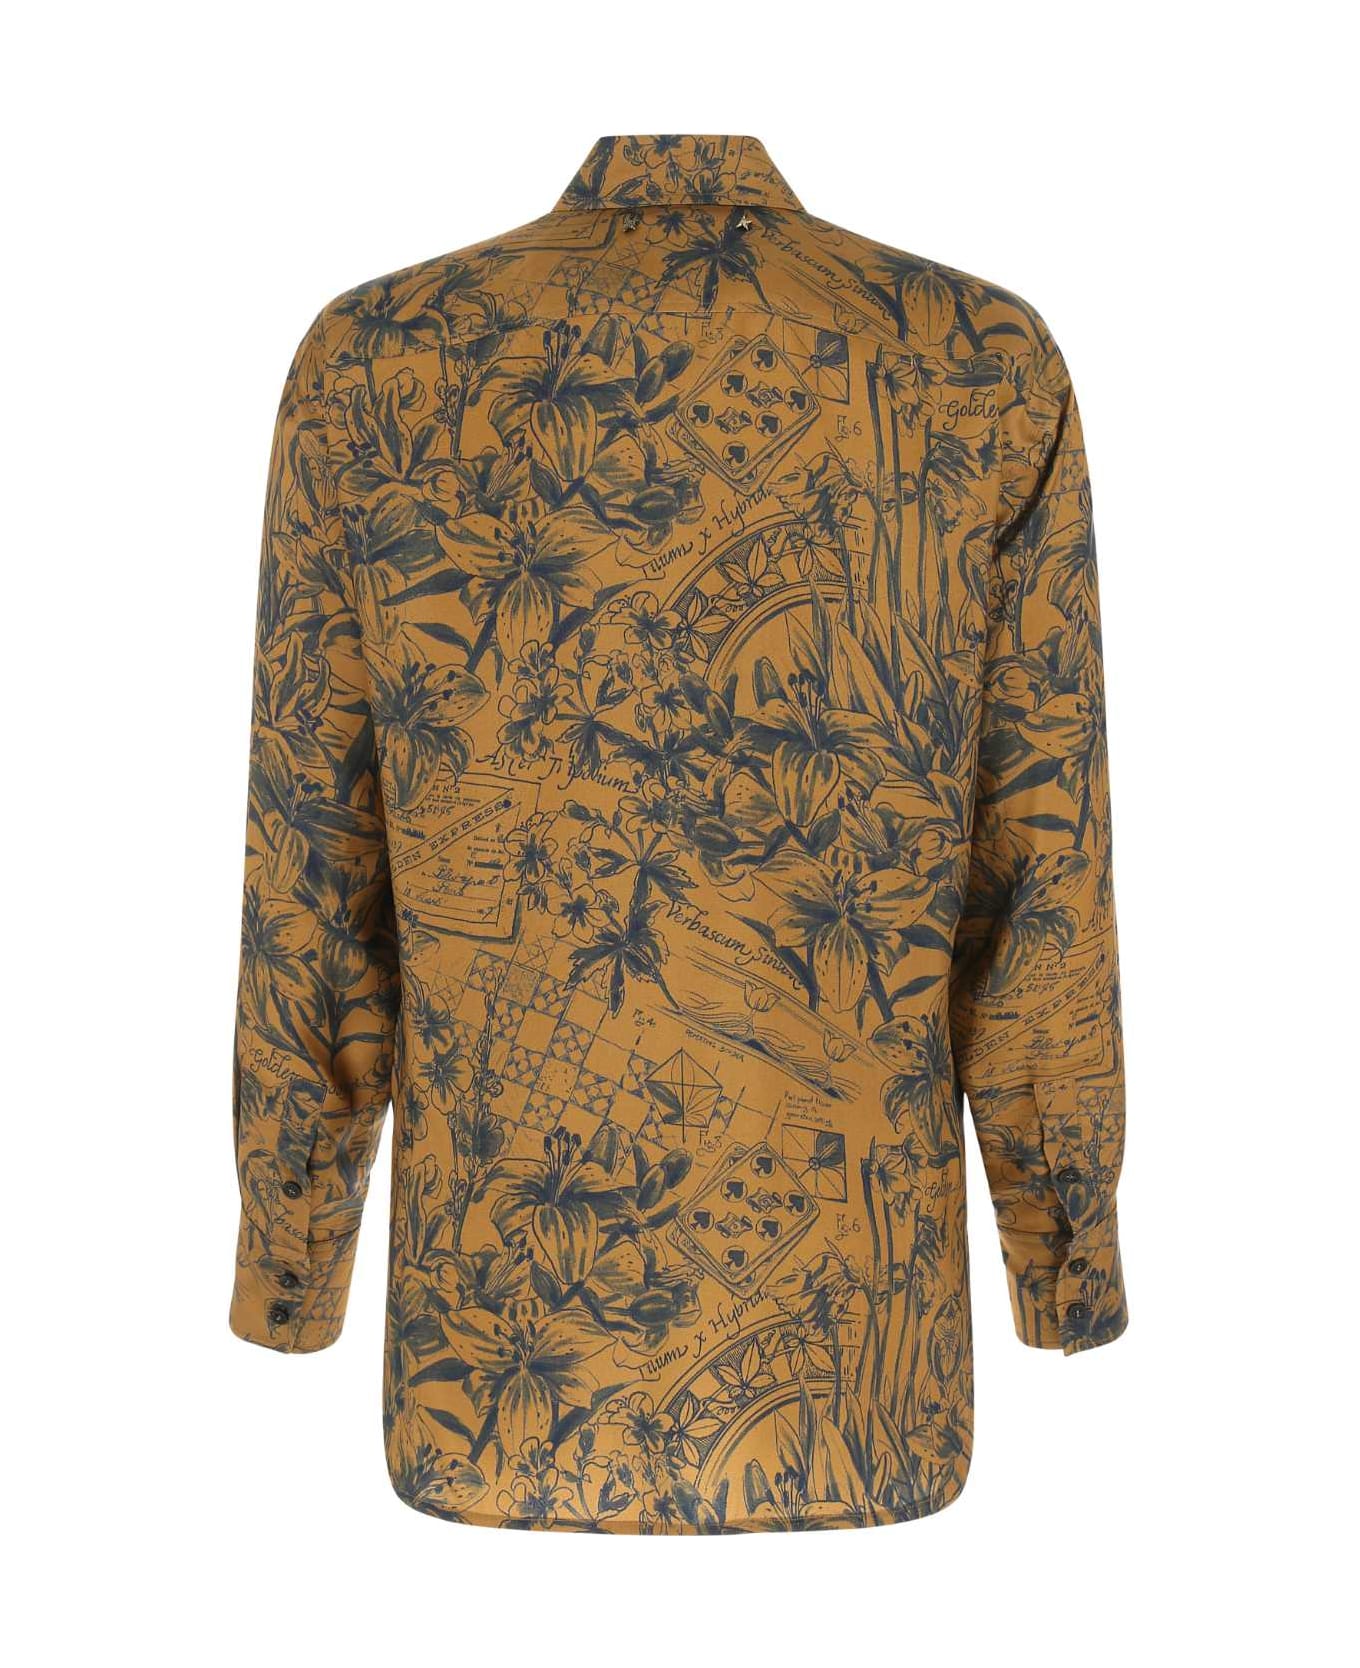 Golden Goose Printed Viscose Oversize Batilda Shirt - 81831 シャツ